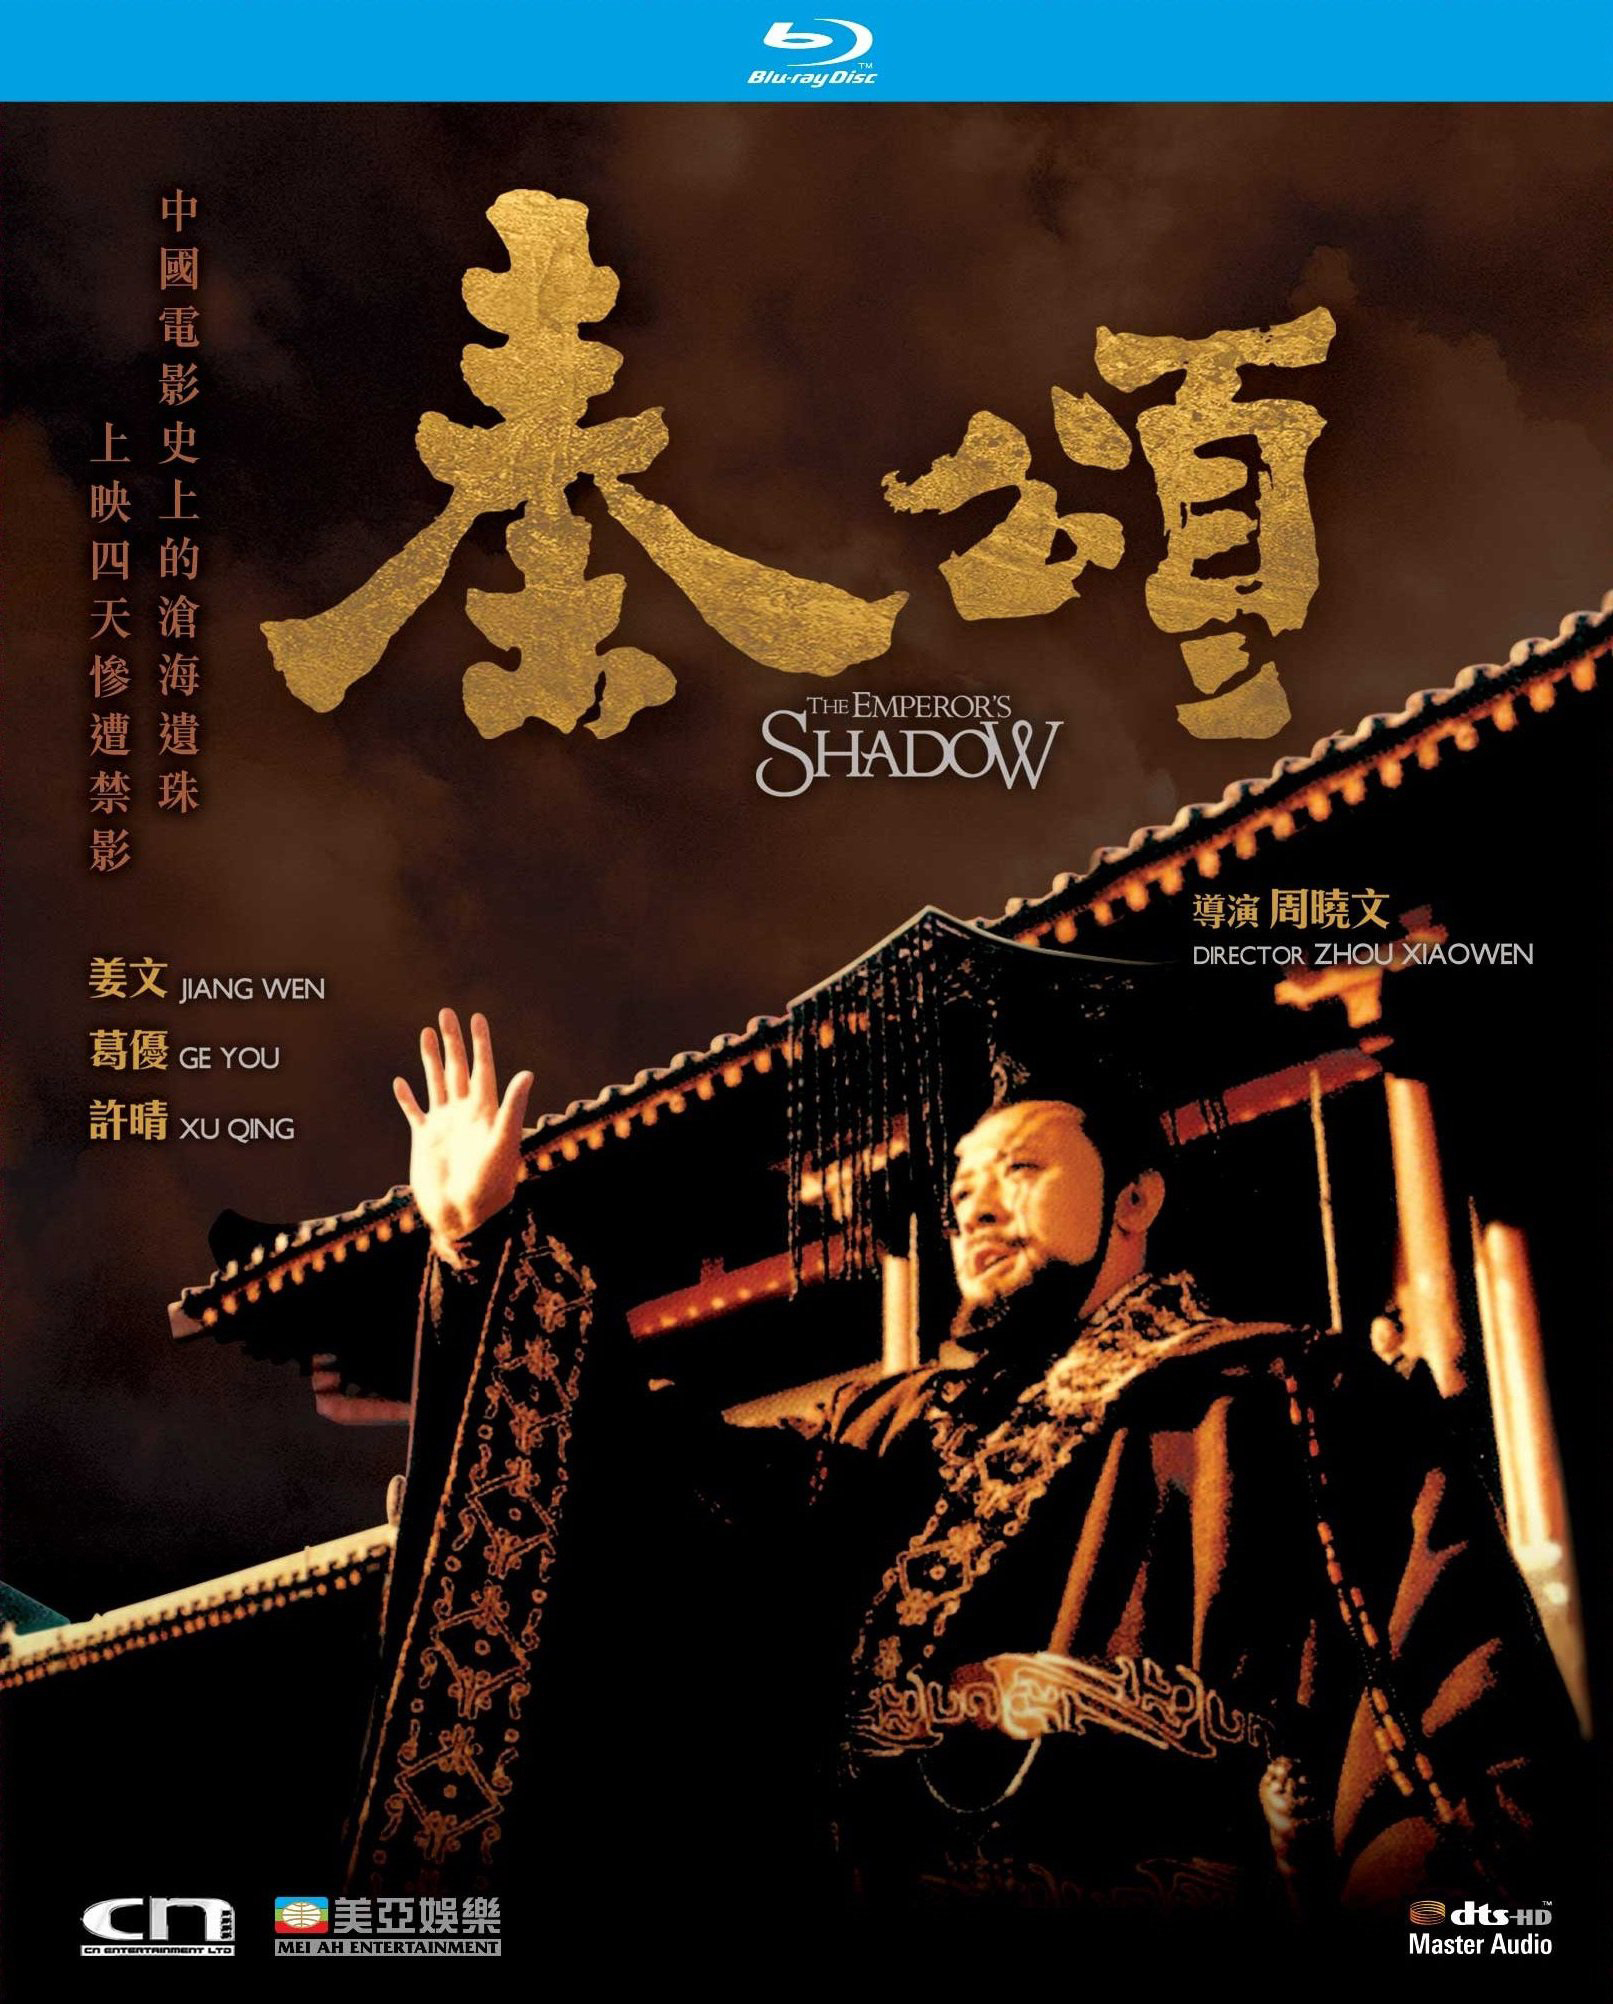 The Emperor's Shadow Blu-ray (秦頌 / Qin song) (Hong Kong)